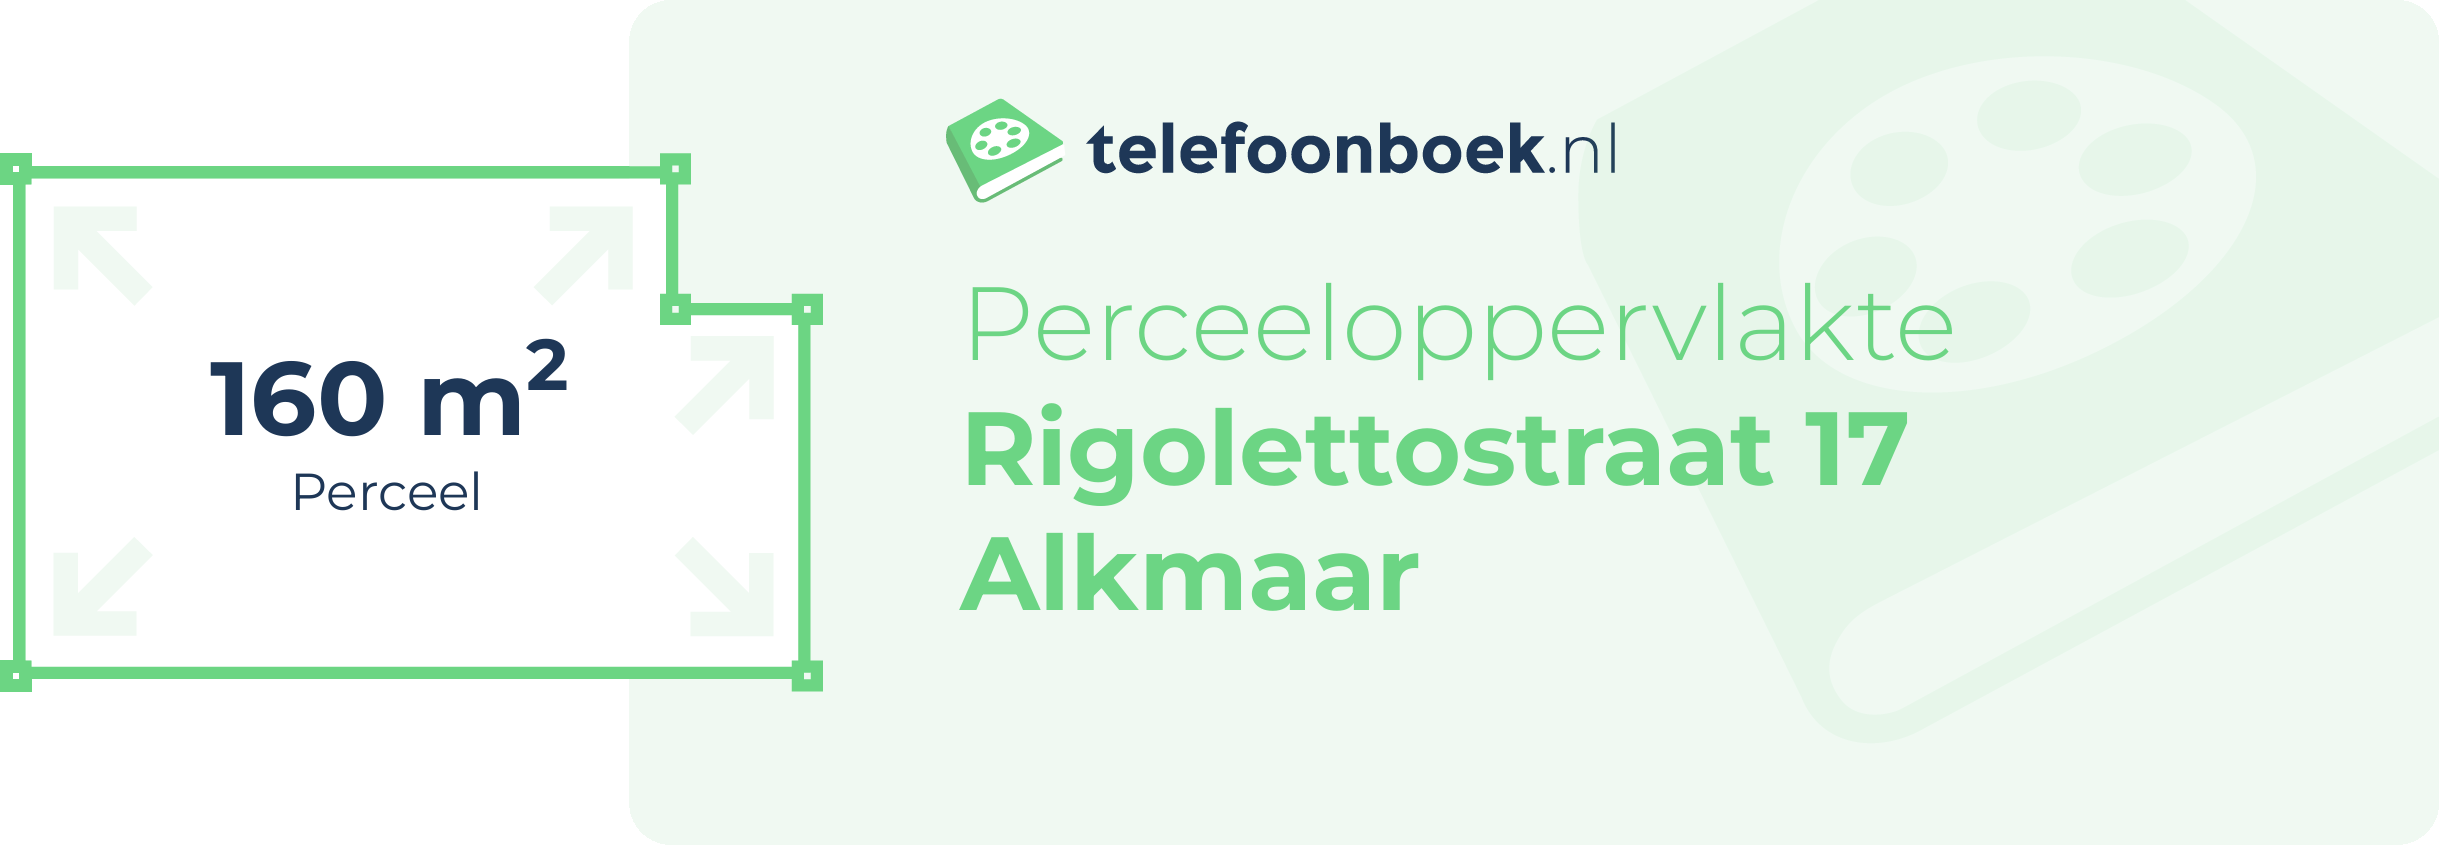 Perceeloppervlakte Rigolettostraat 17 Alkmaar